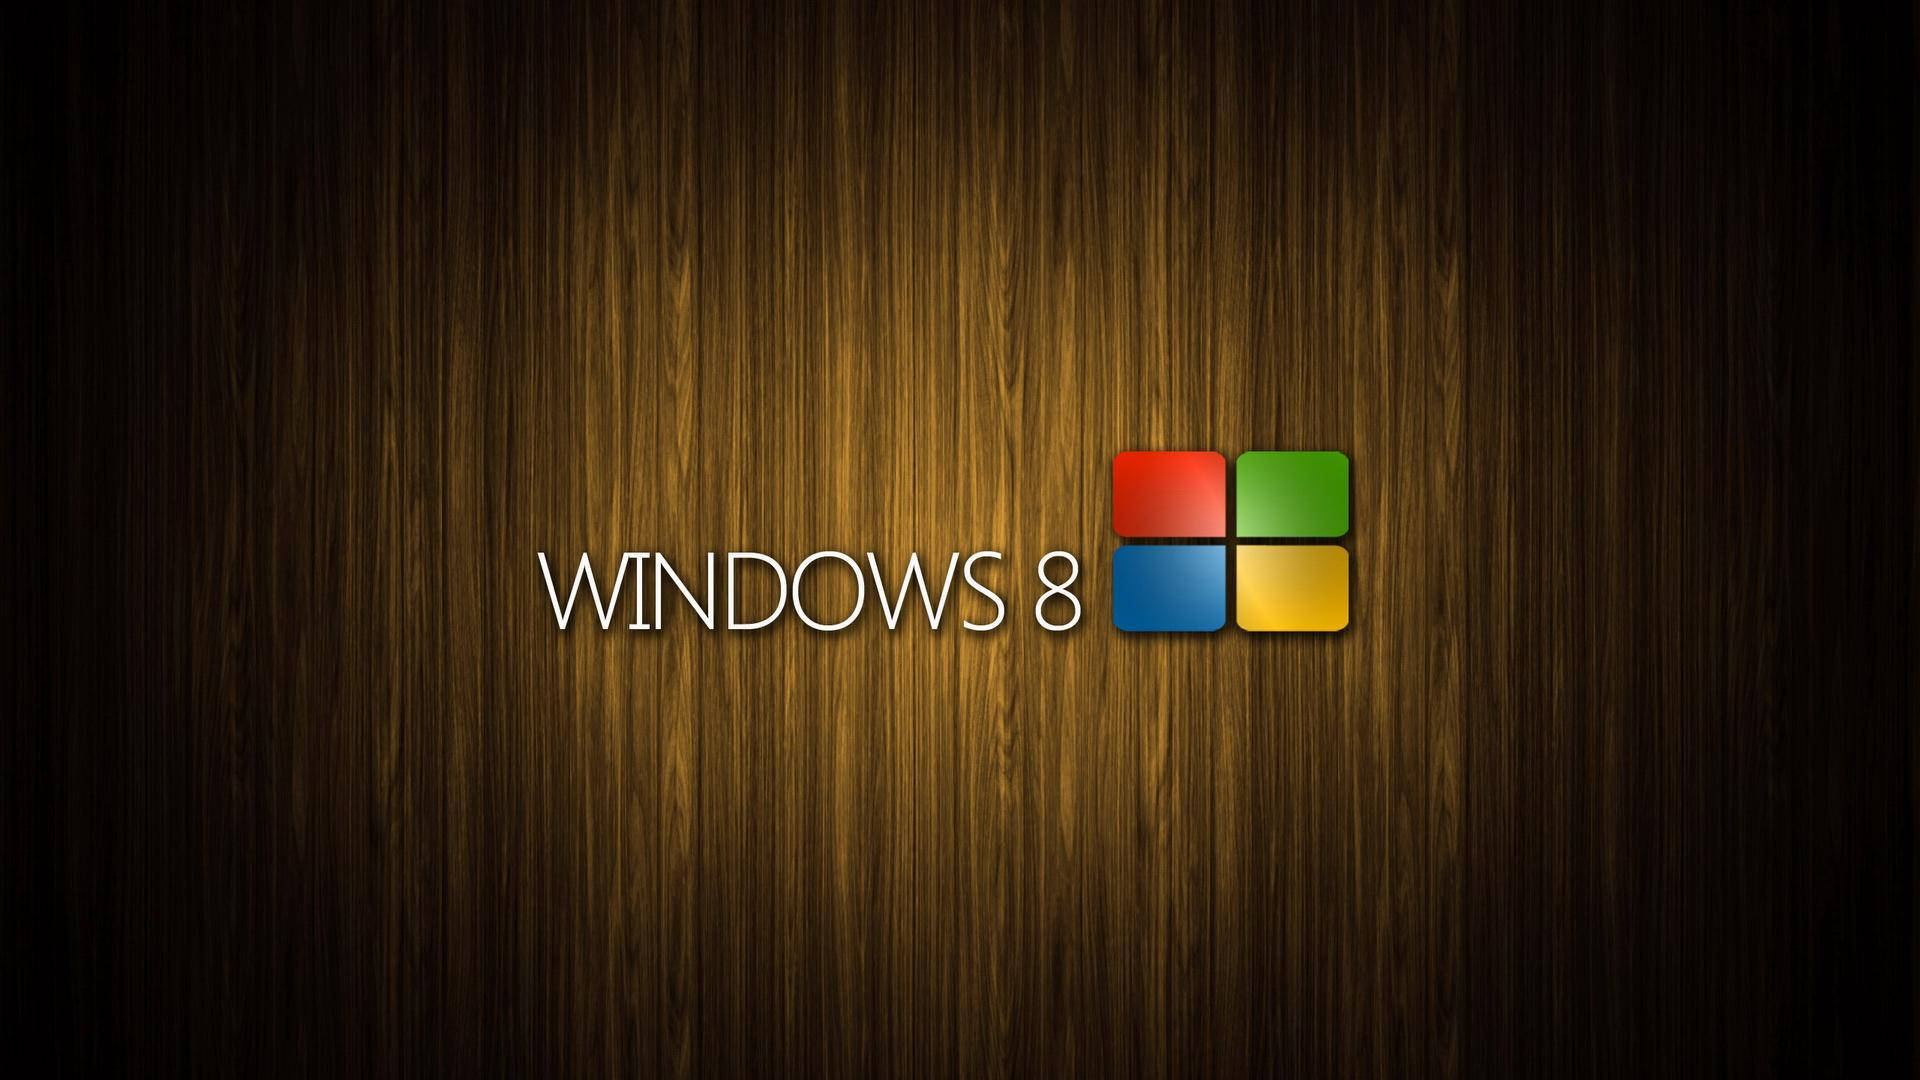 Wooden Windows 8 Background In Vignette Wallpaper